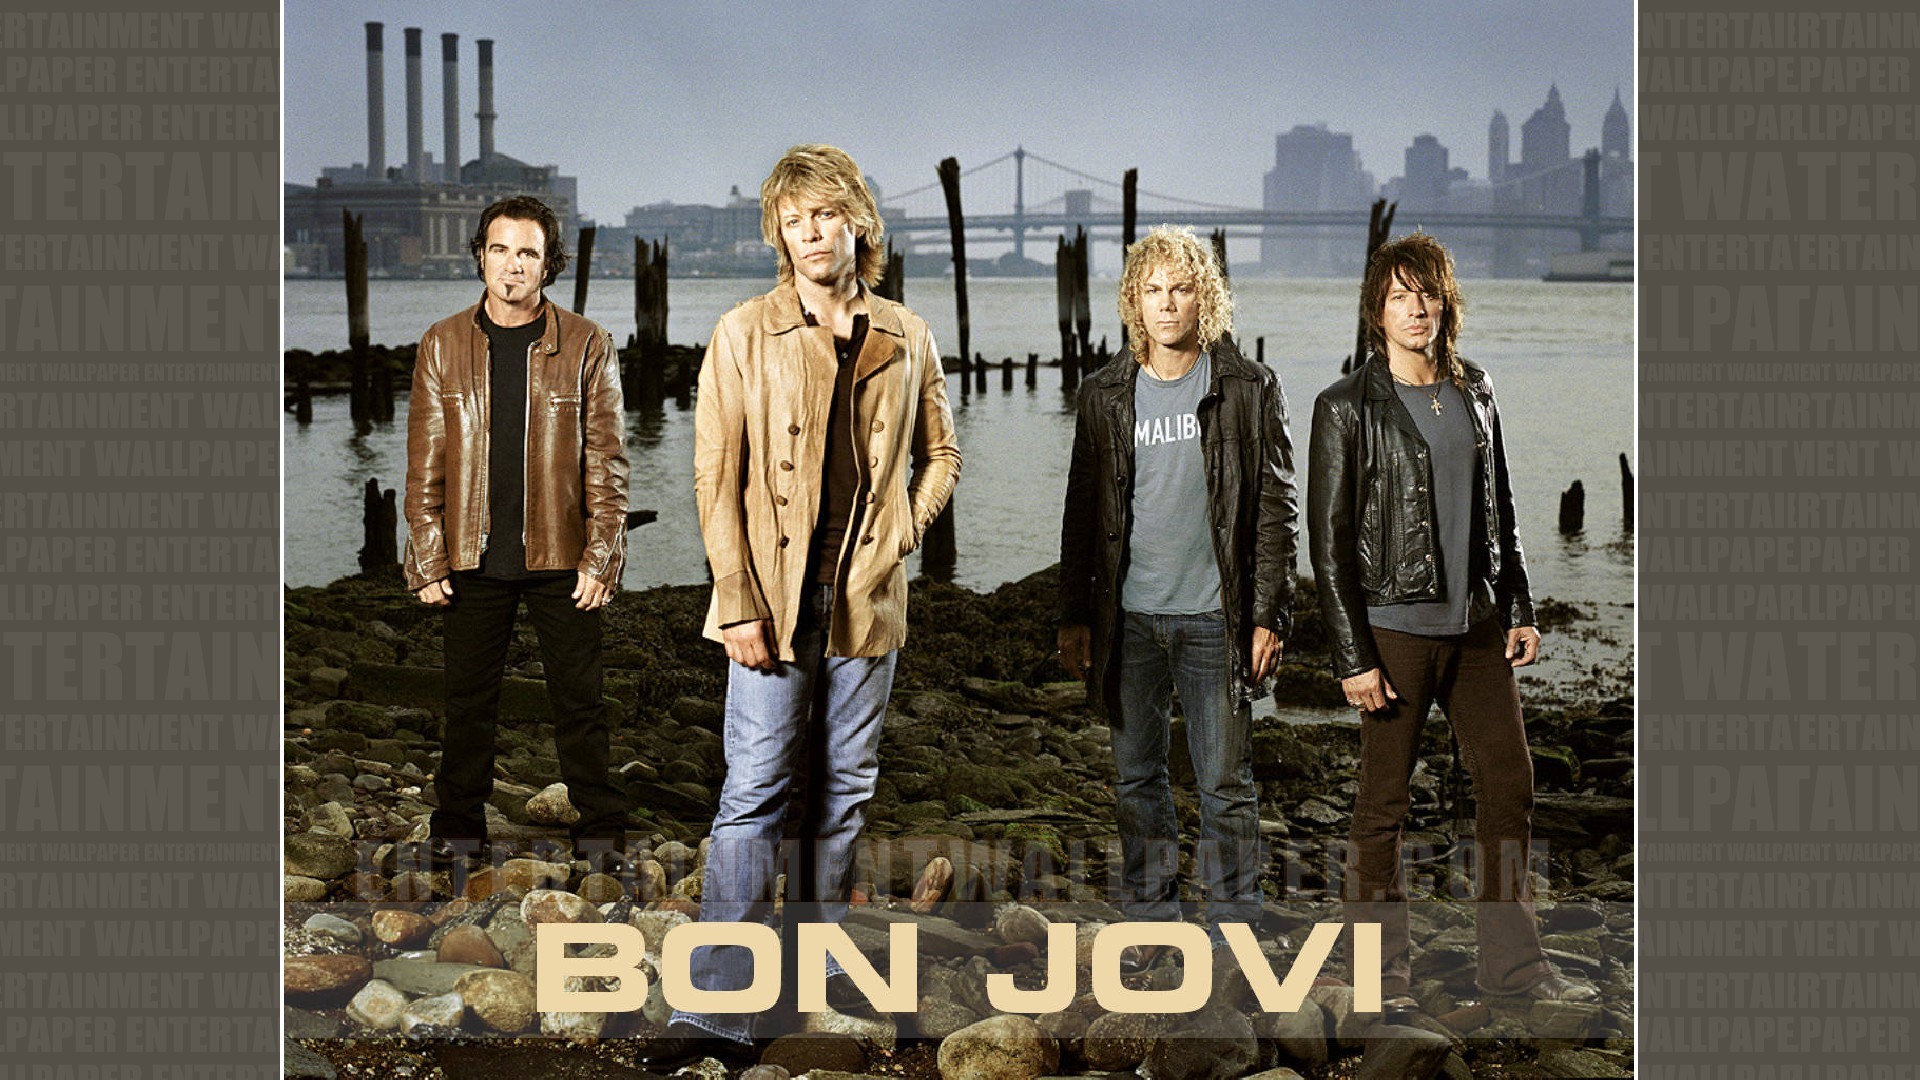 1920x1080 Bon Jovi Wallpaper - Original size, download now.